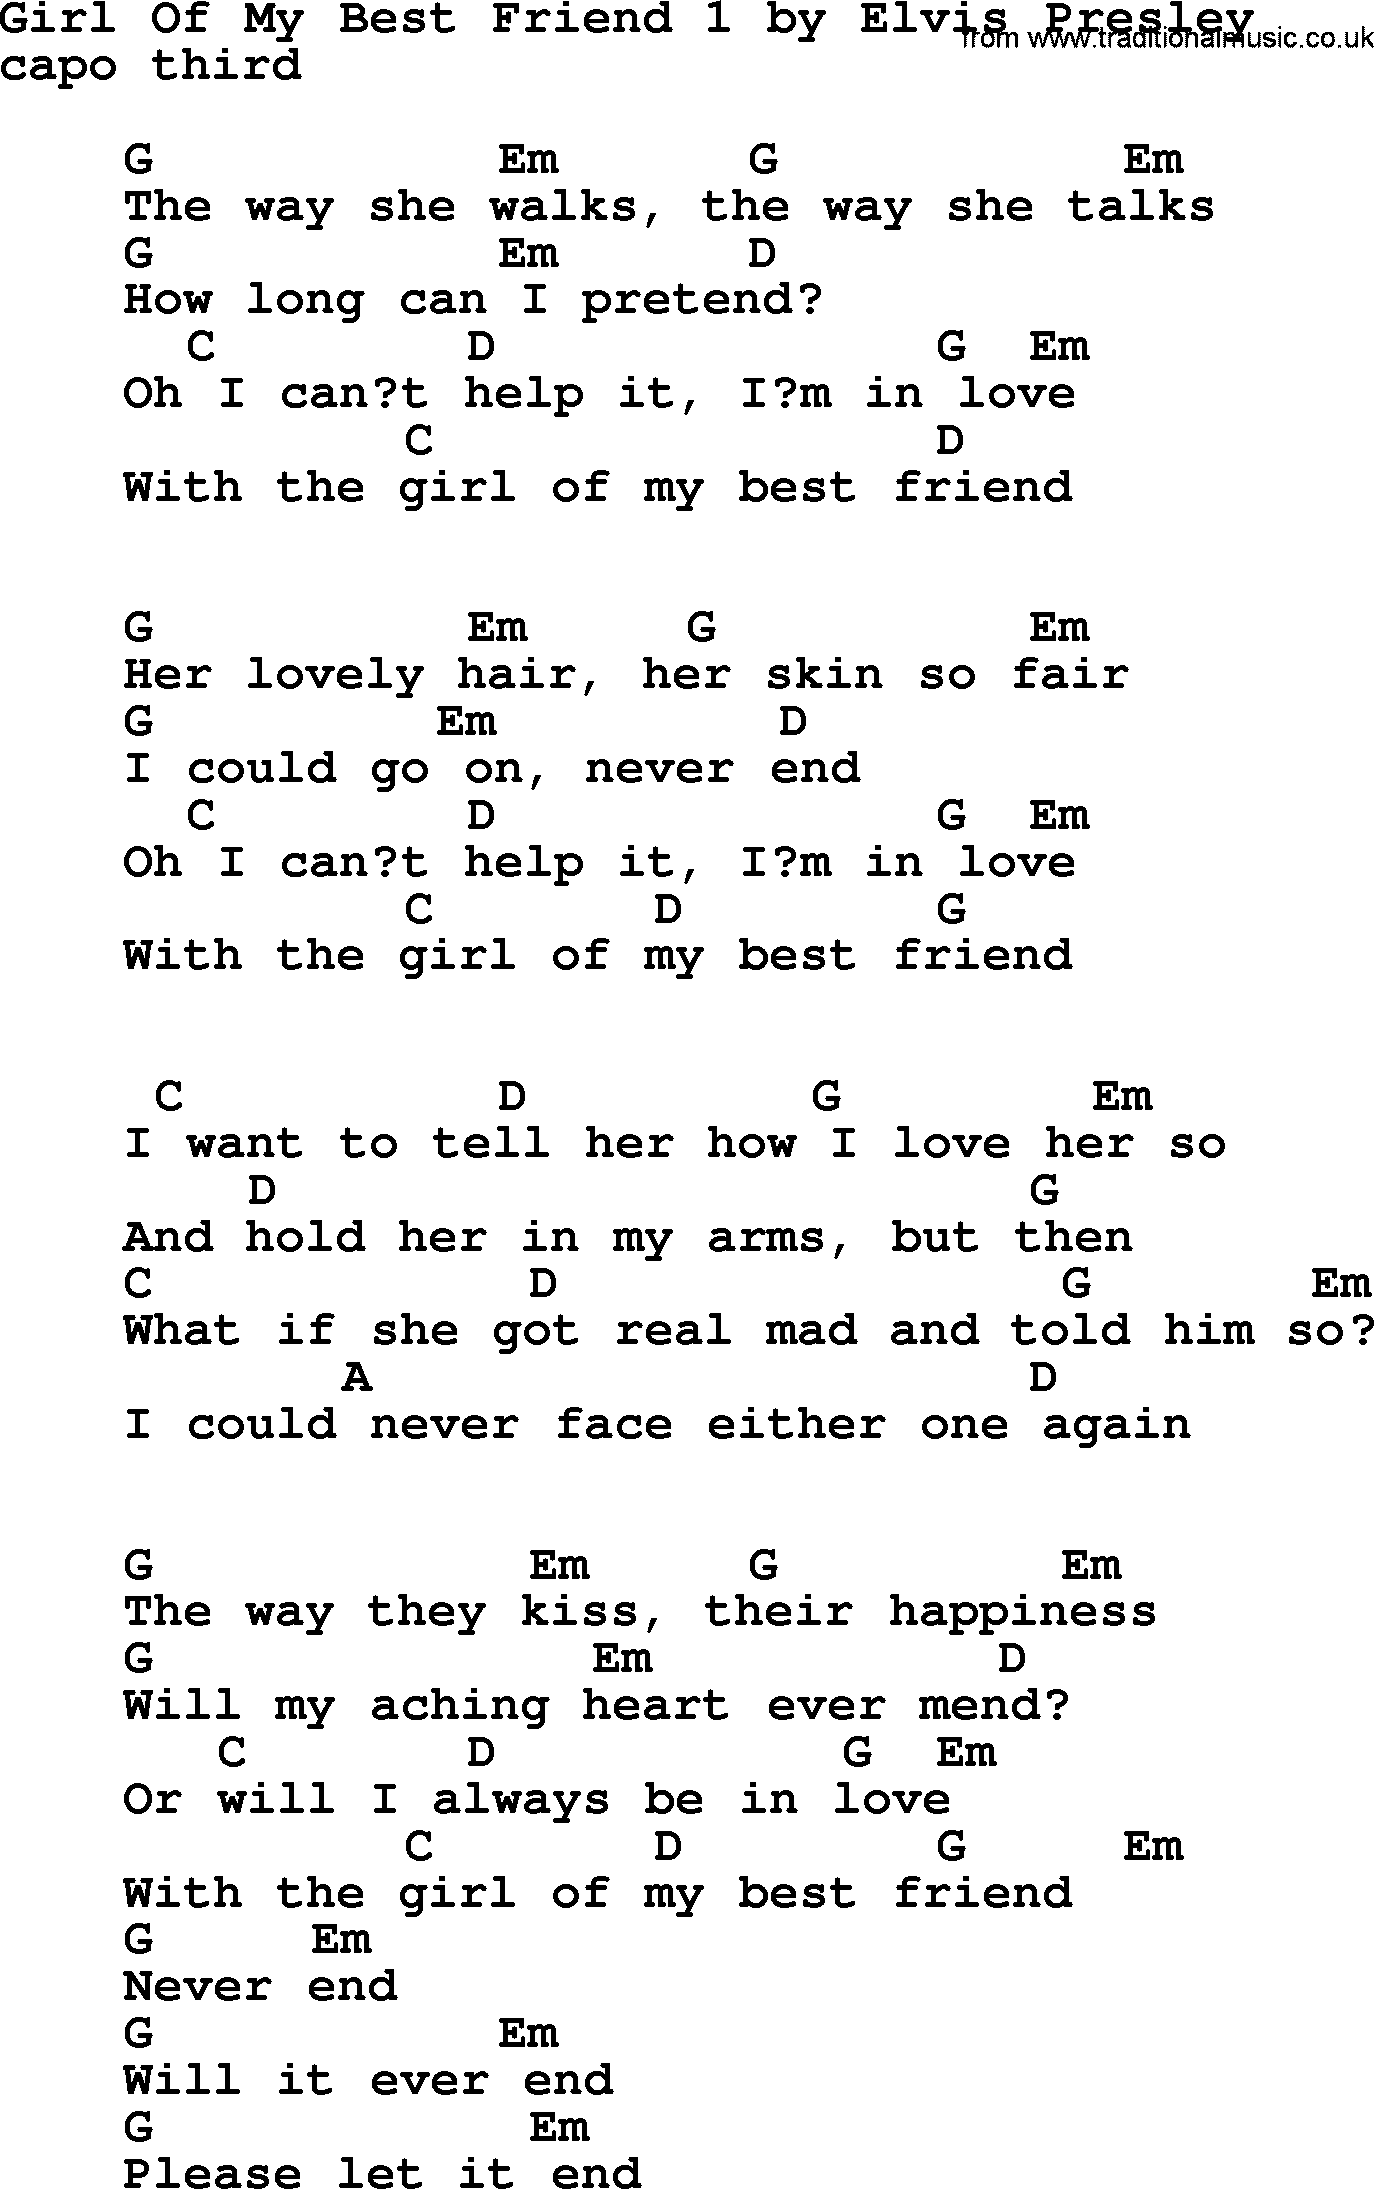 Elvis Presley song: Girl Of My Best Friend 1, lyrics and chords